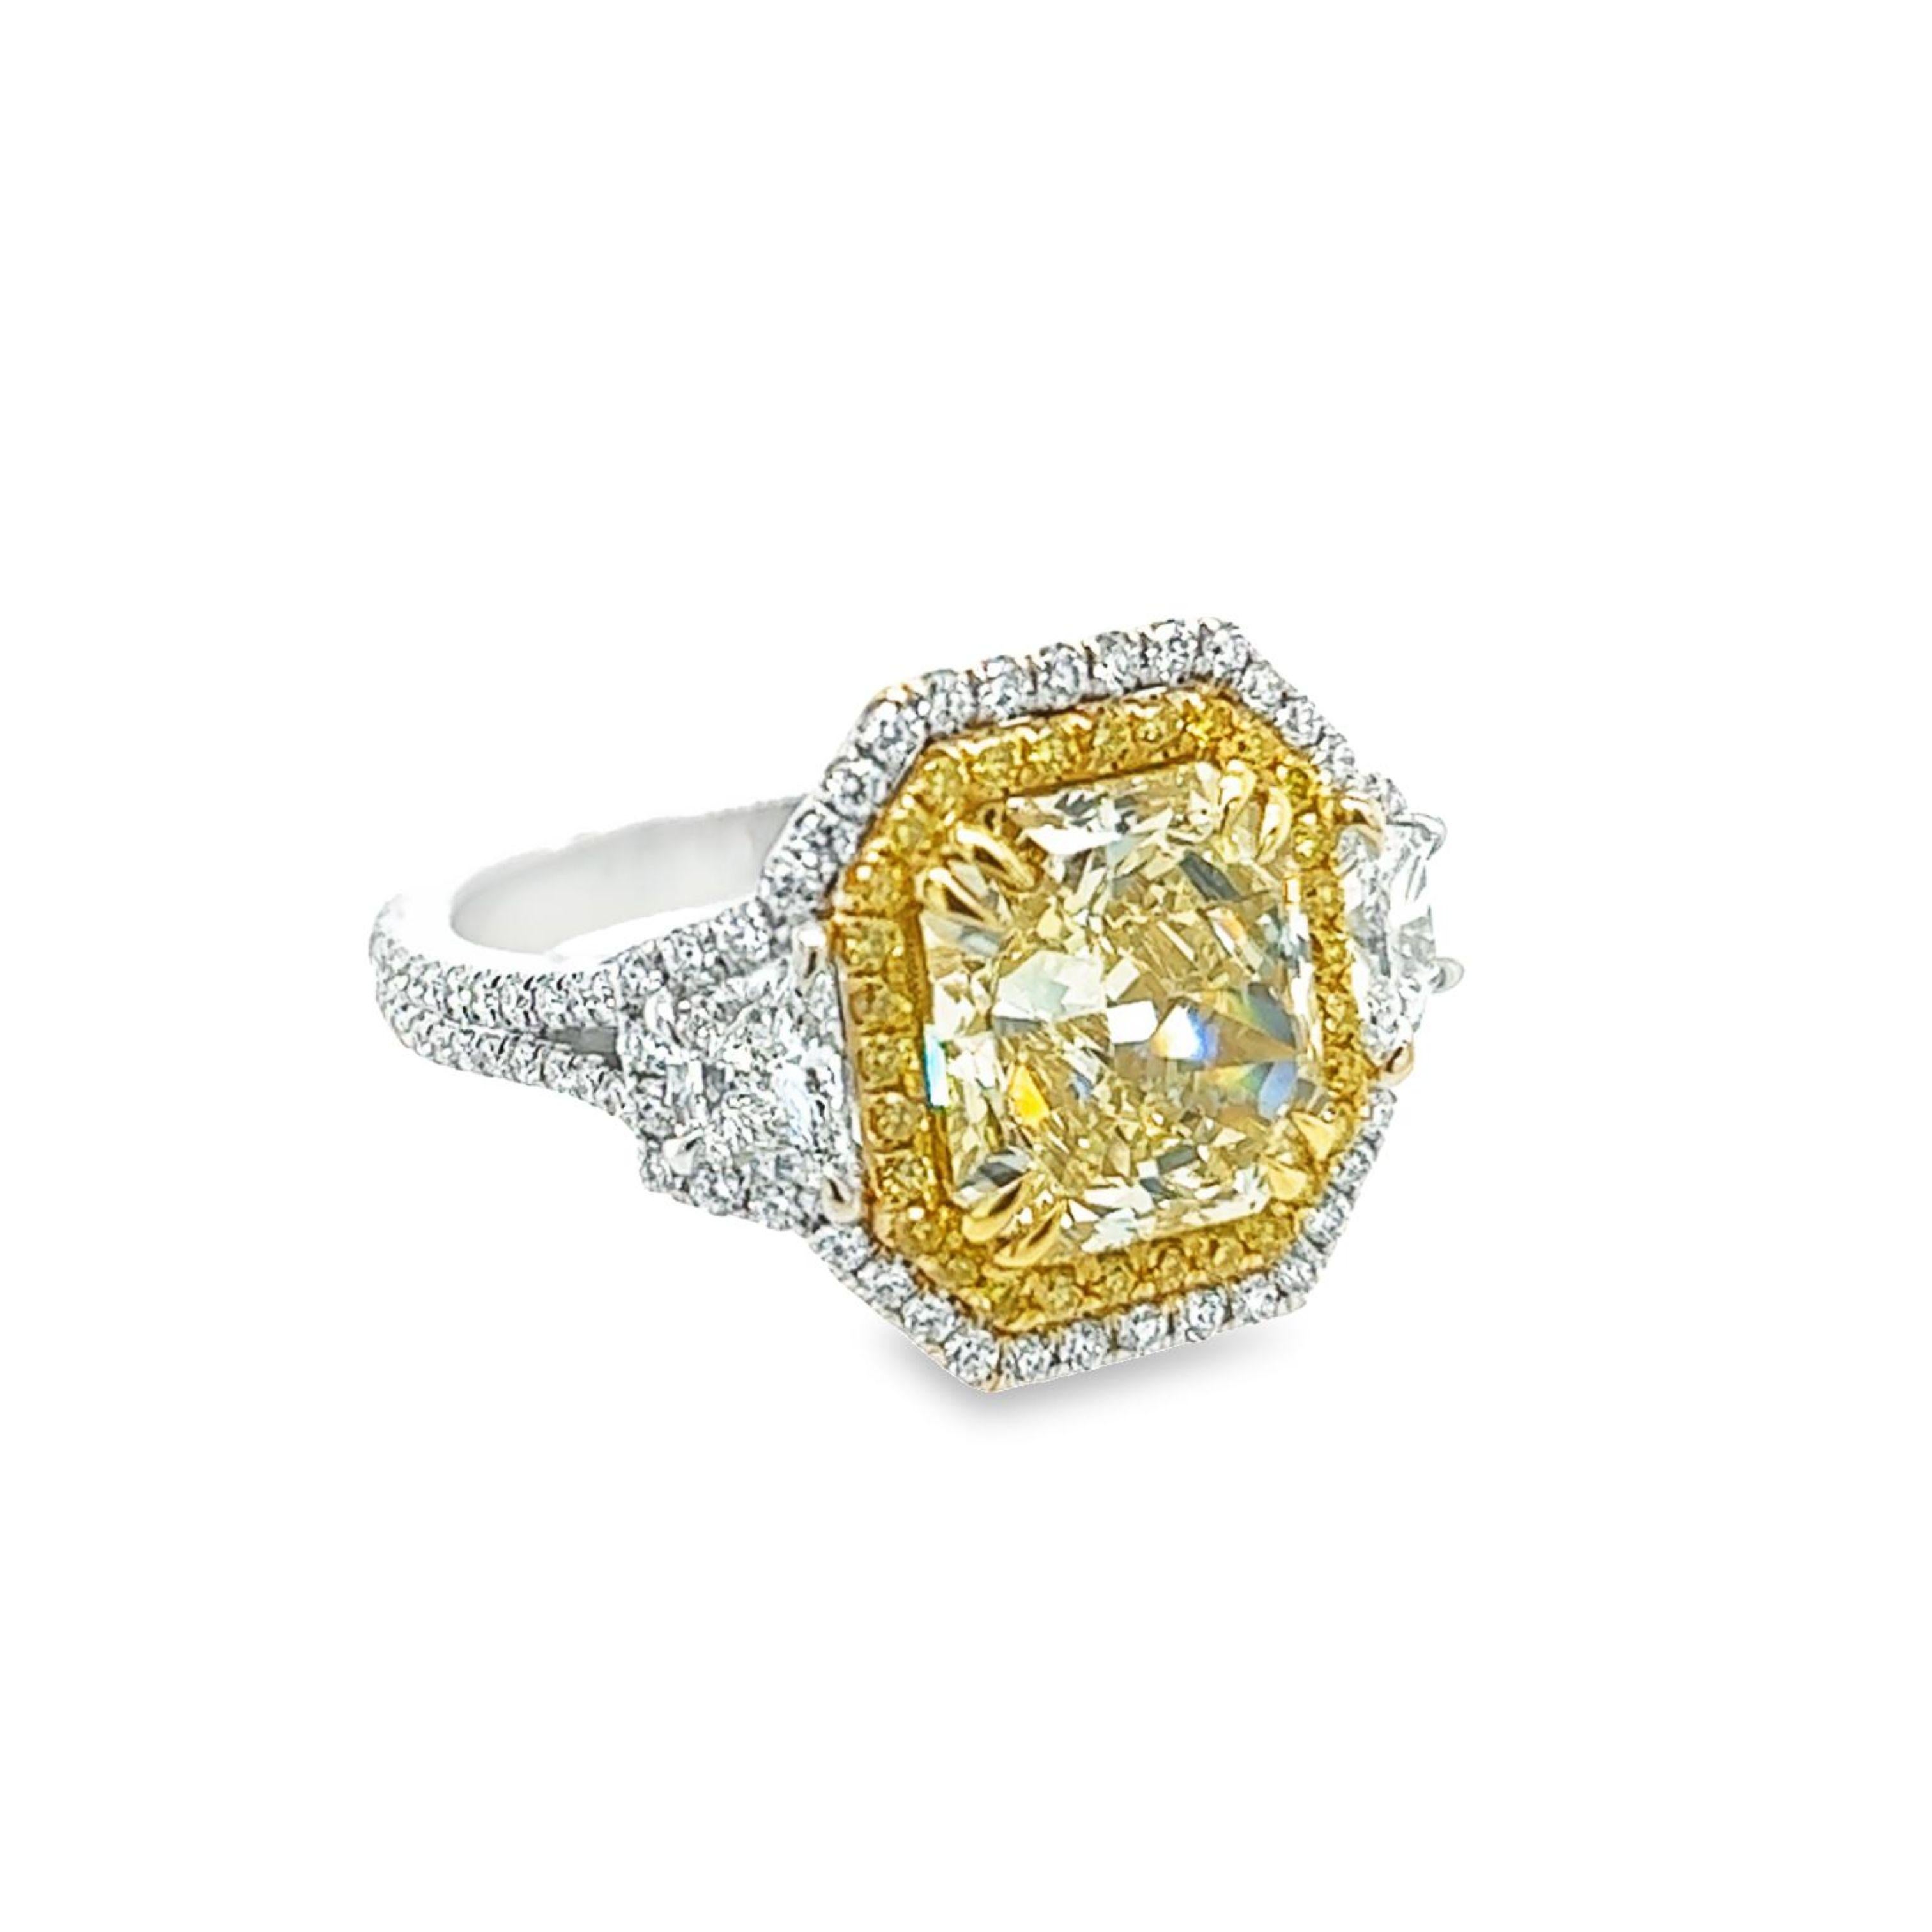 David Rosenberg Verlobungsring mit 3,67 Karat strahlendem gelbem VVS2 GIA Diamant (Marquiseschliff) im Angebot